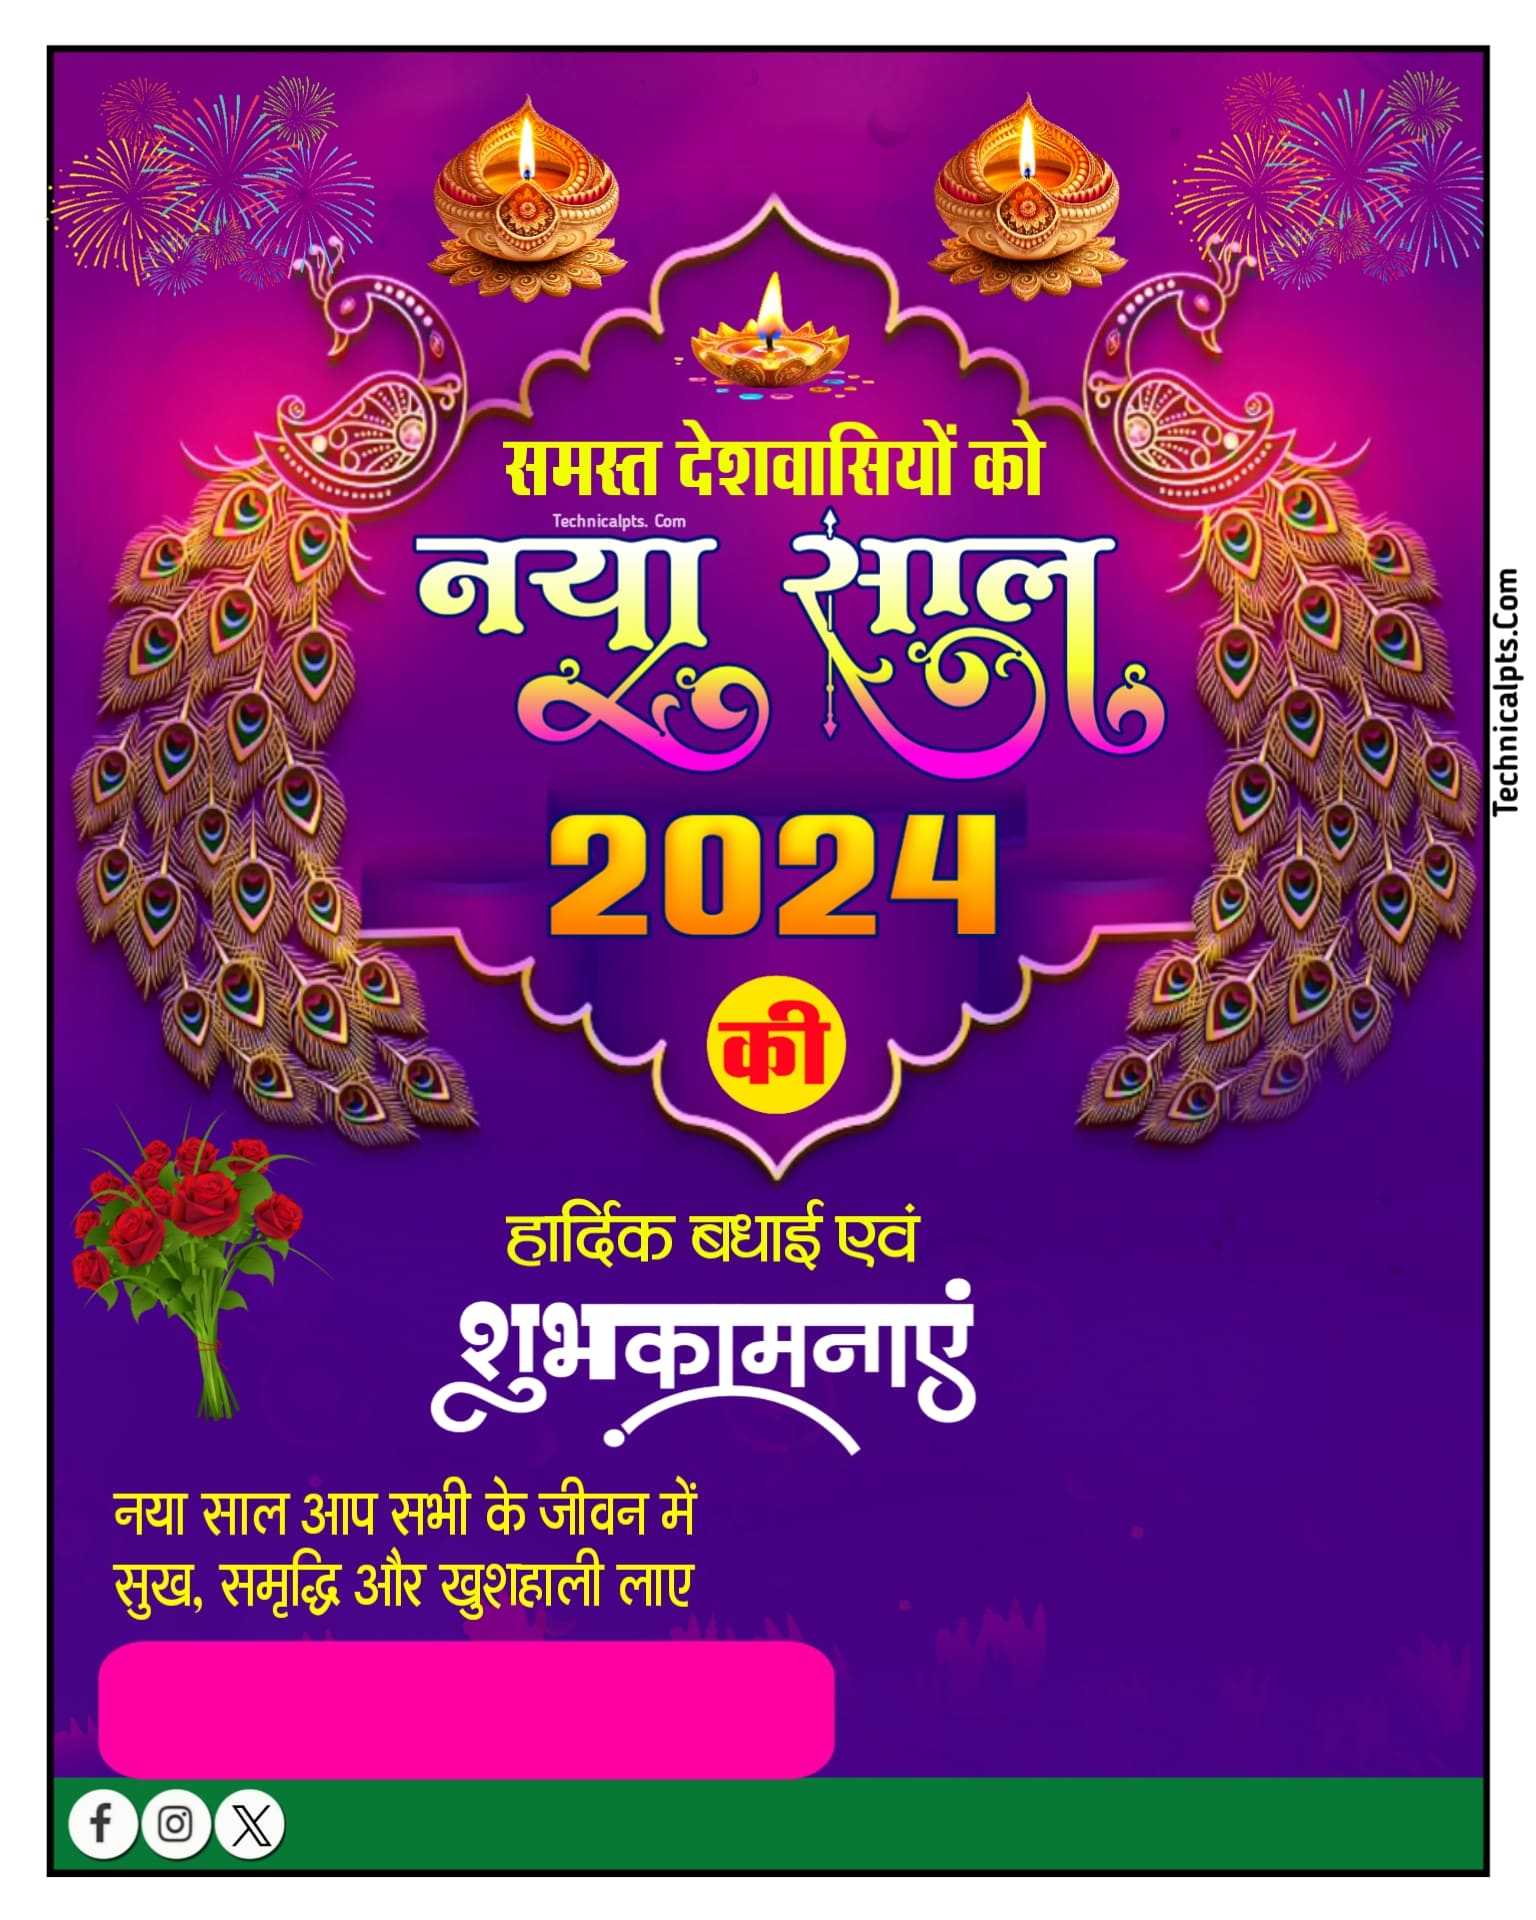 Naya Sal 2024 poster banaen mobile se Happy new year 2024 banner